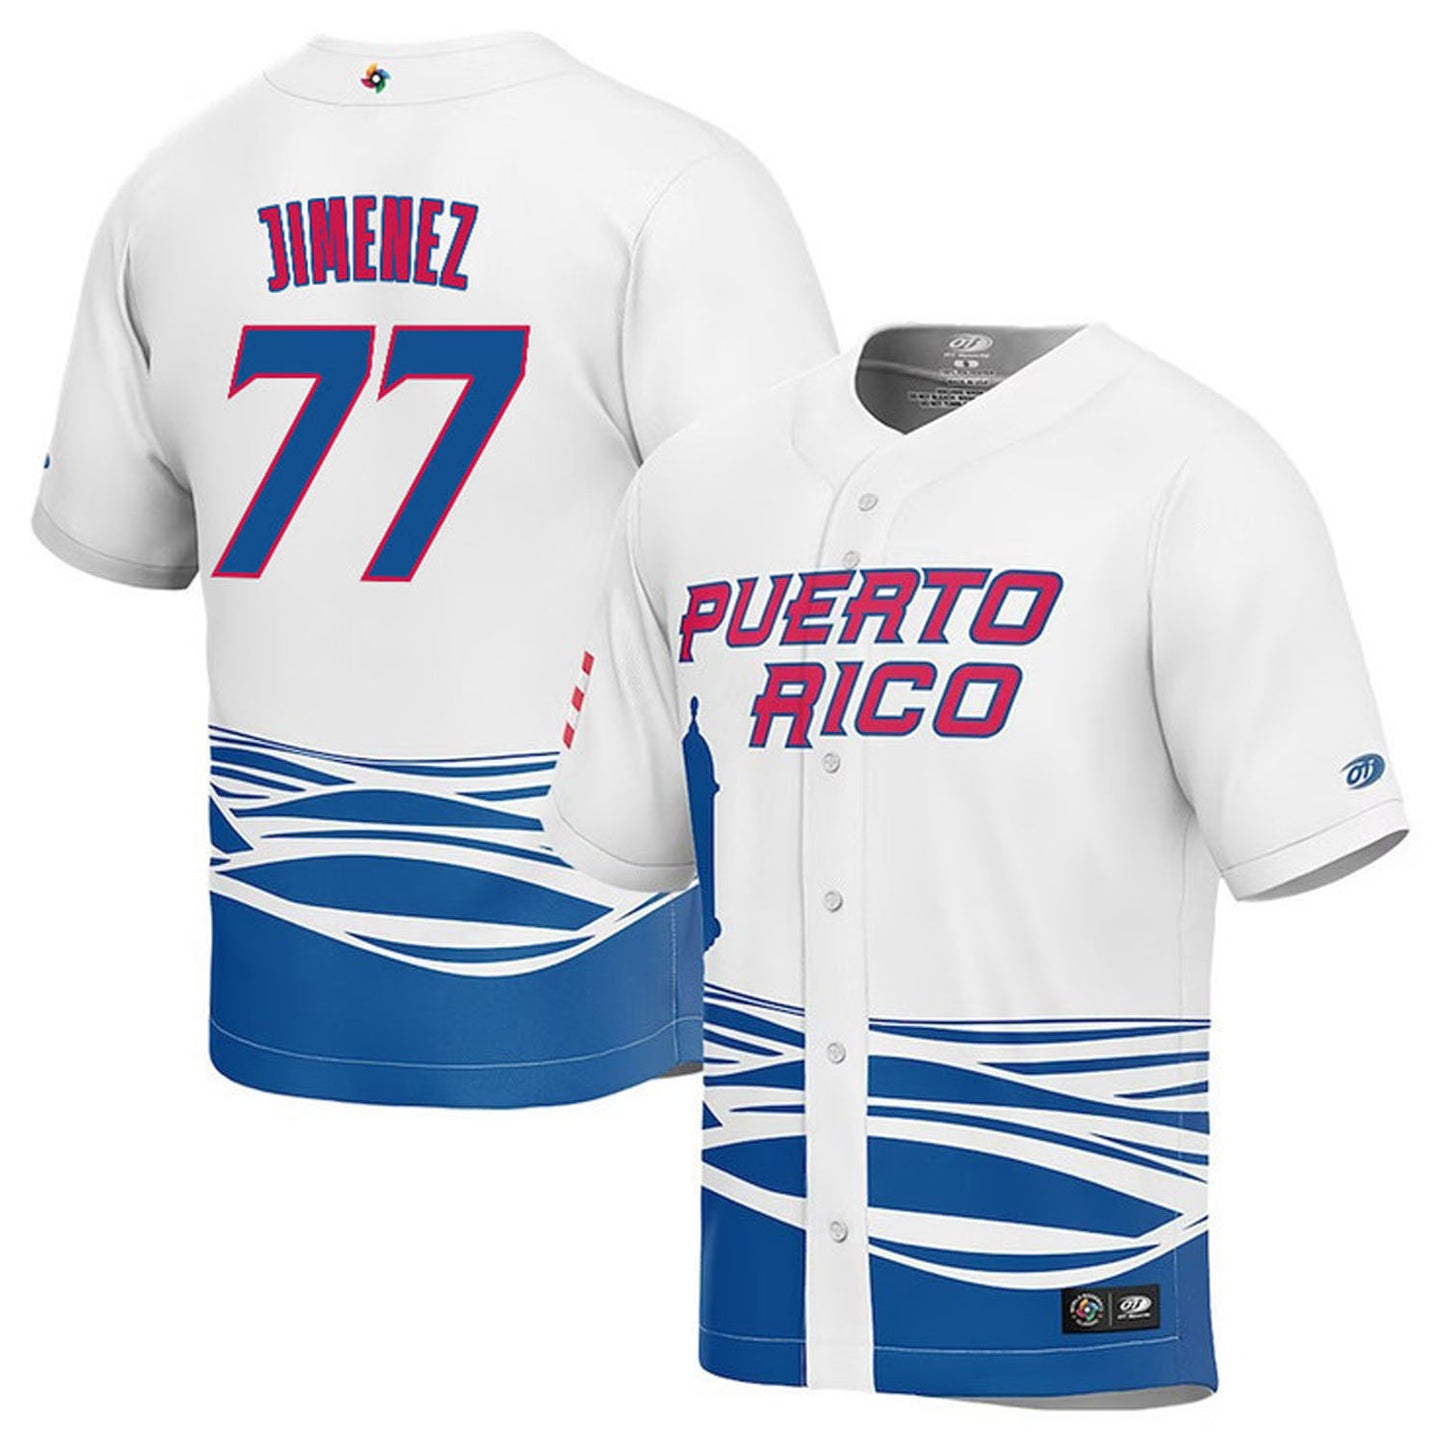 WBC Joe Jimenez Puerto Rico 77 Jersey